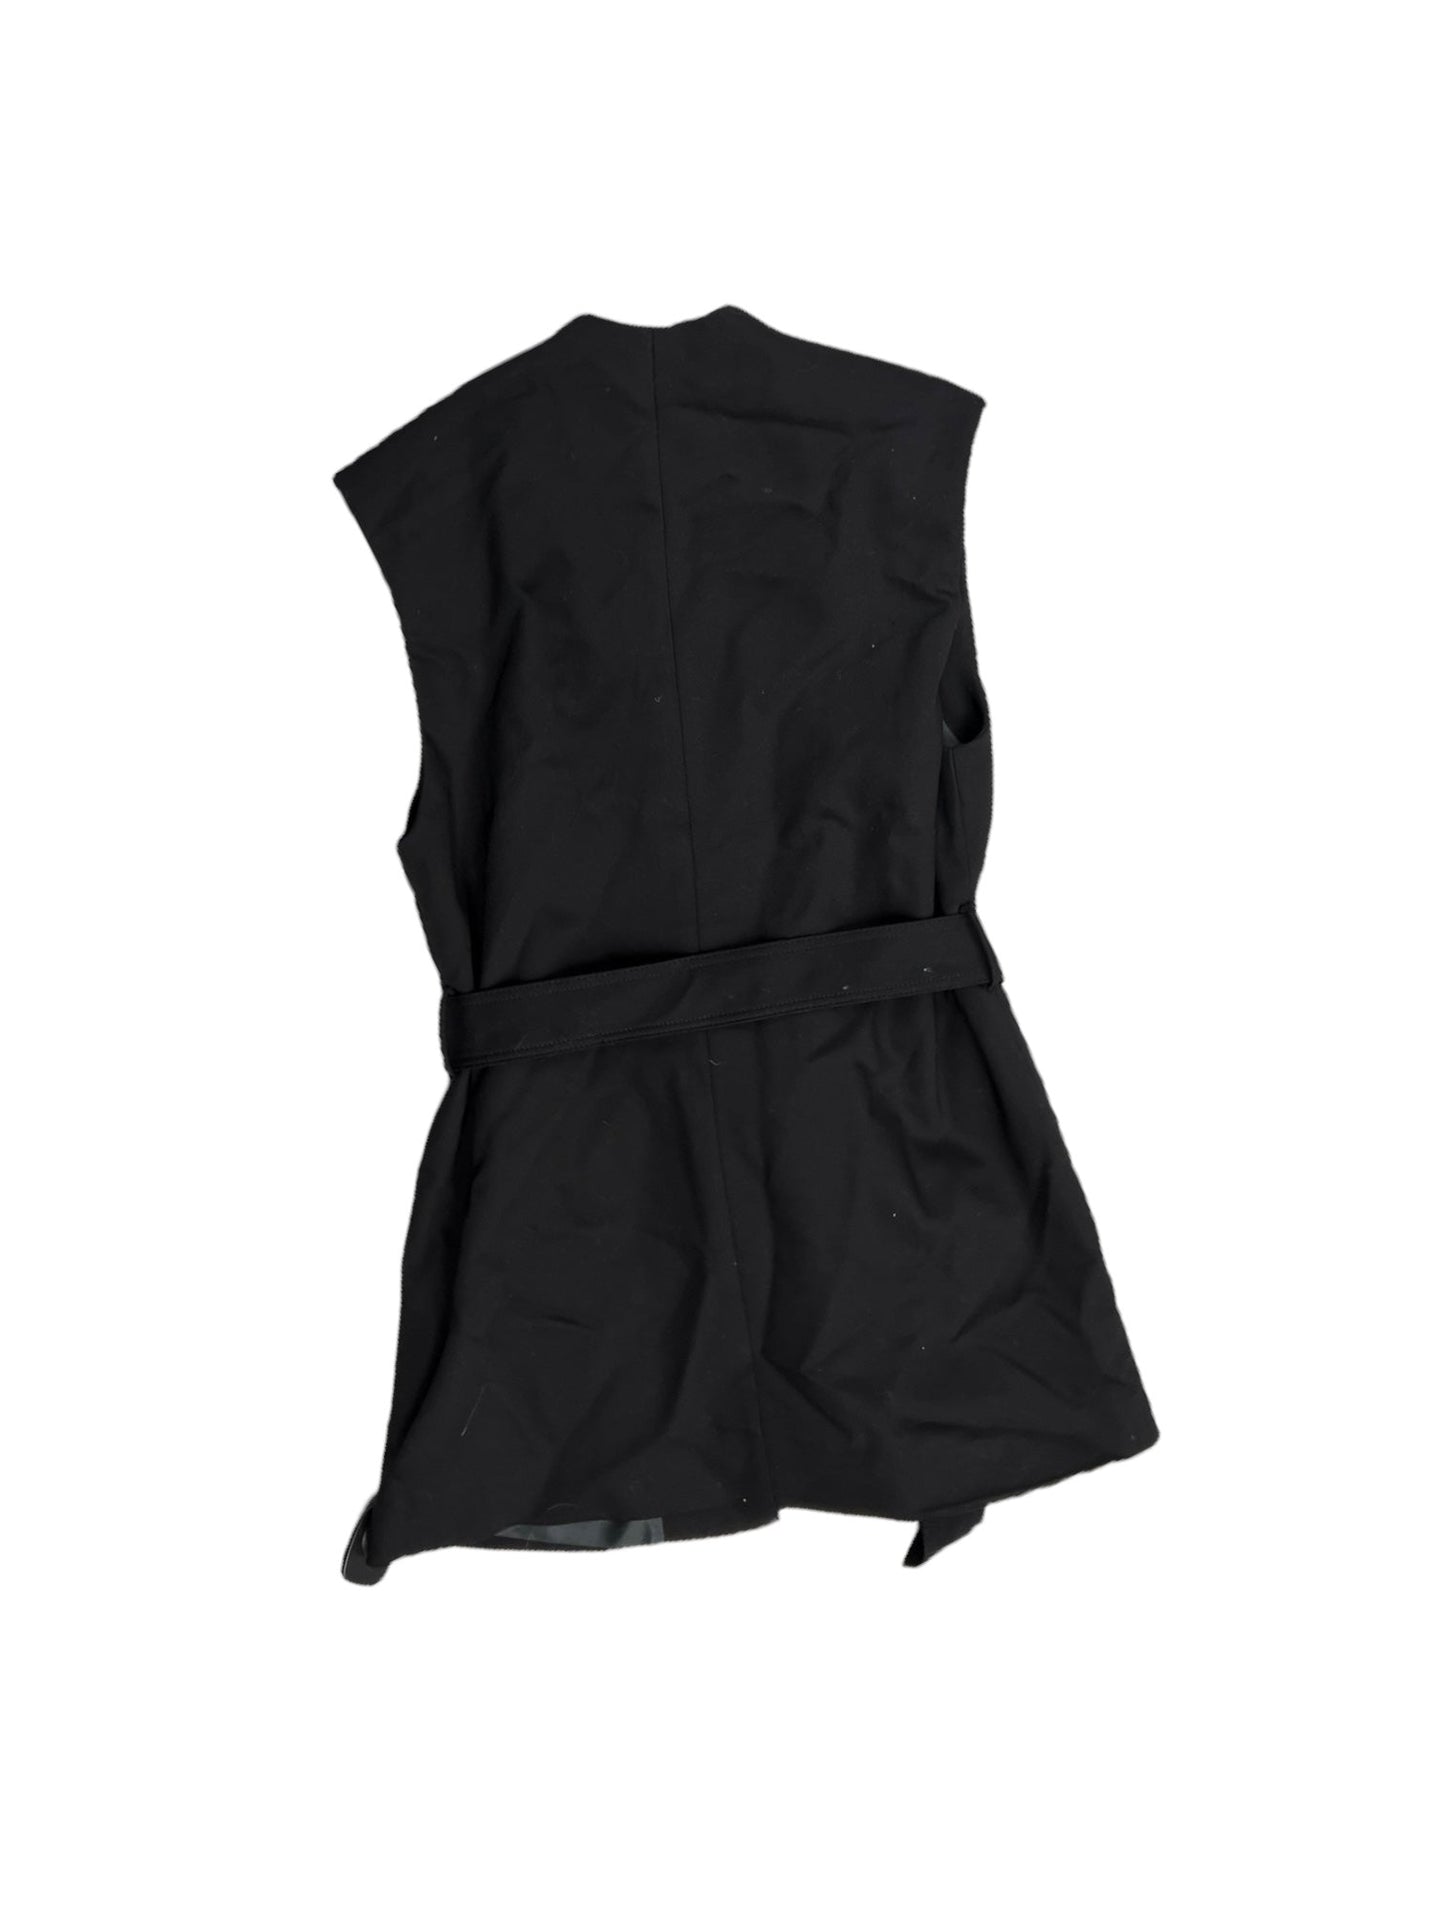 Vest Other By Zara  Size: Xs